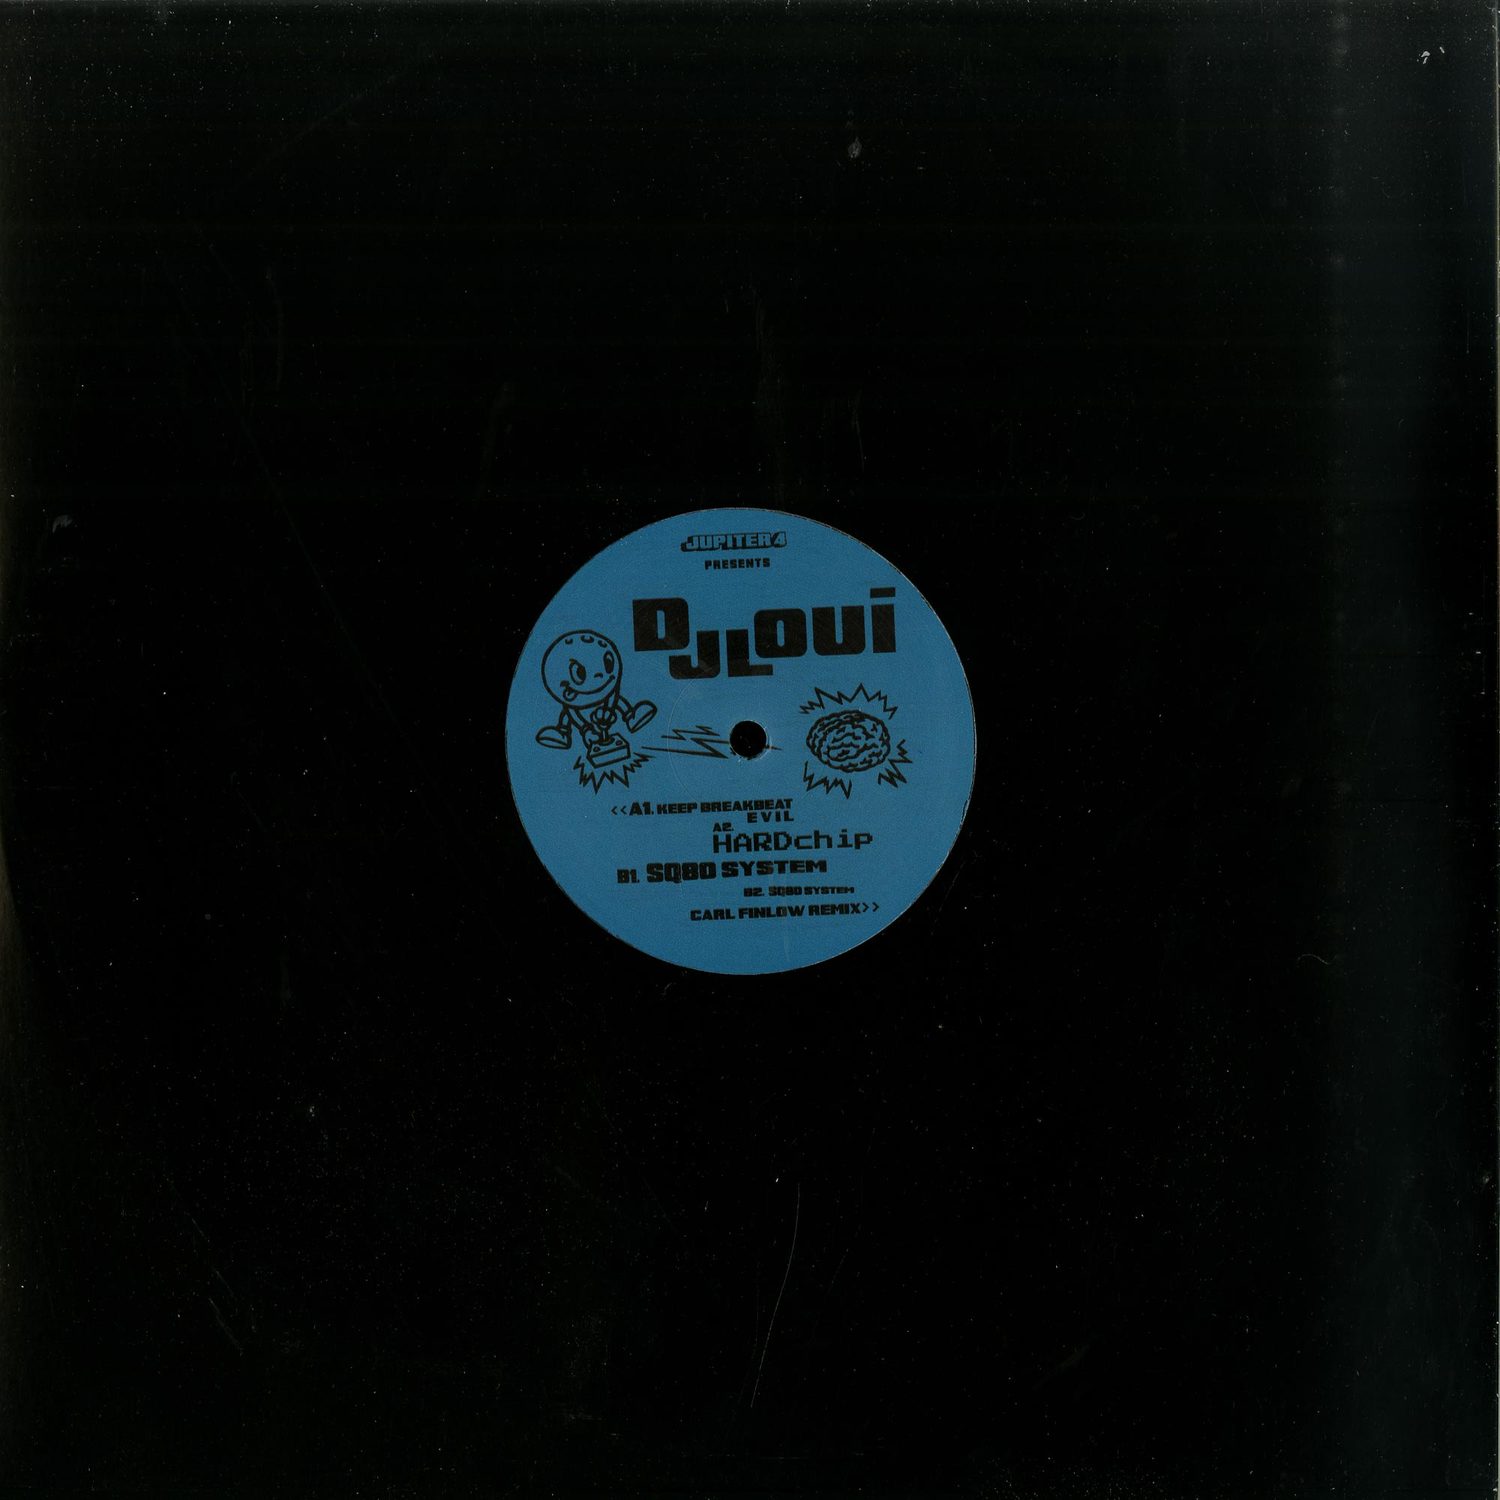 DJ Loui - SQ80 SYSTEM EP 